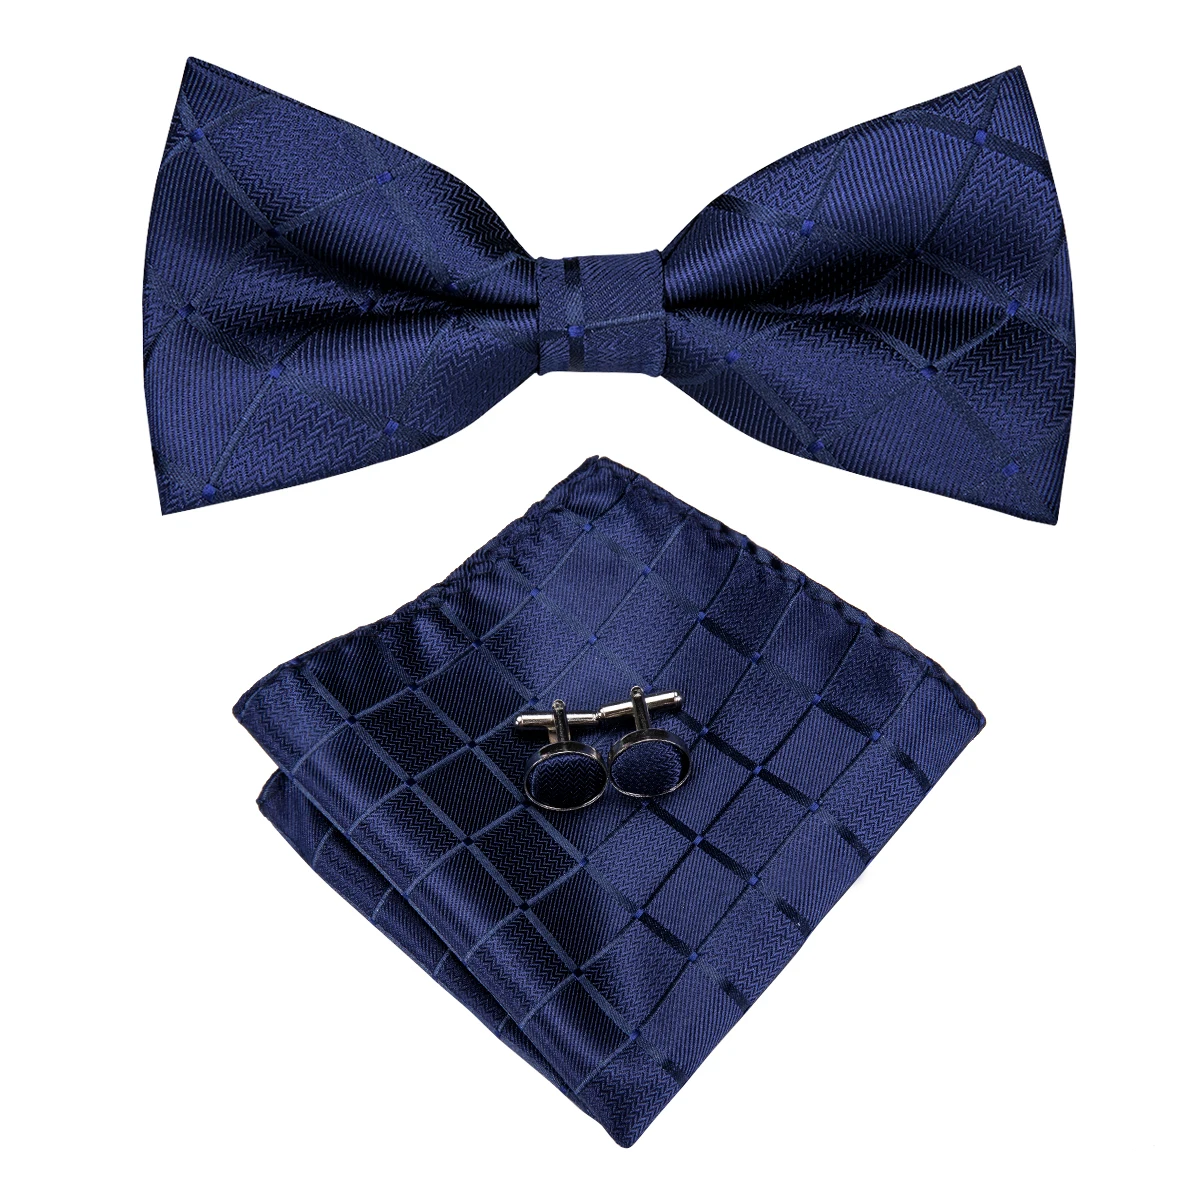 Hi-Tie бренд мужской галстук-бабочка модный синий Одноцветный шелковый галстук-бабочка платок запонки набор мужской свадебный галстук-бабочка noeud papillon homme LH-753